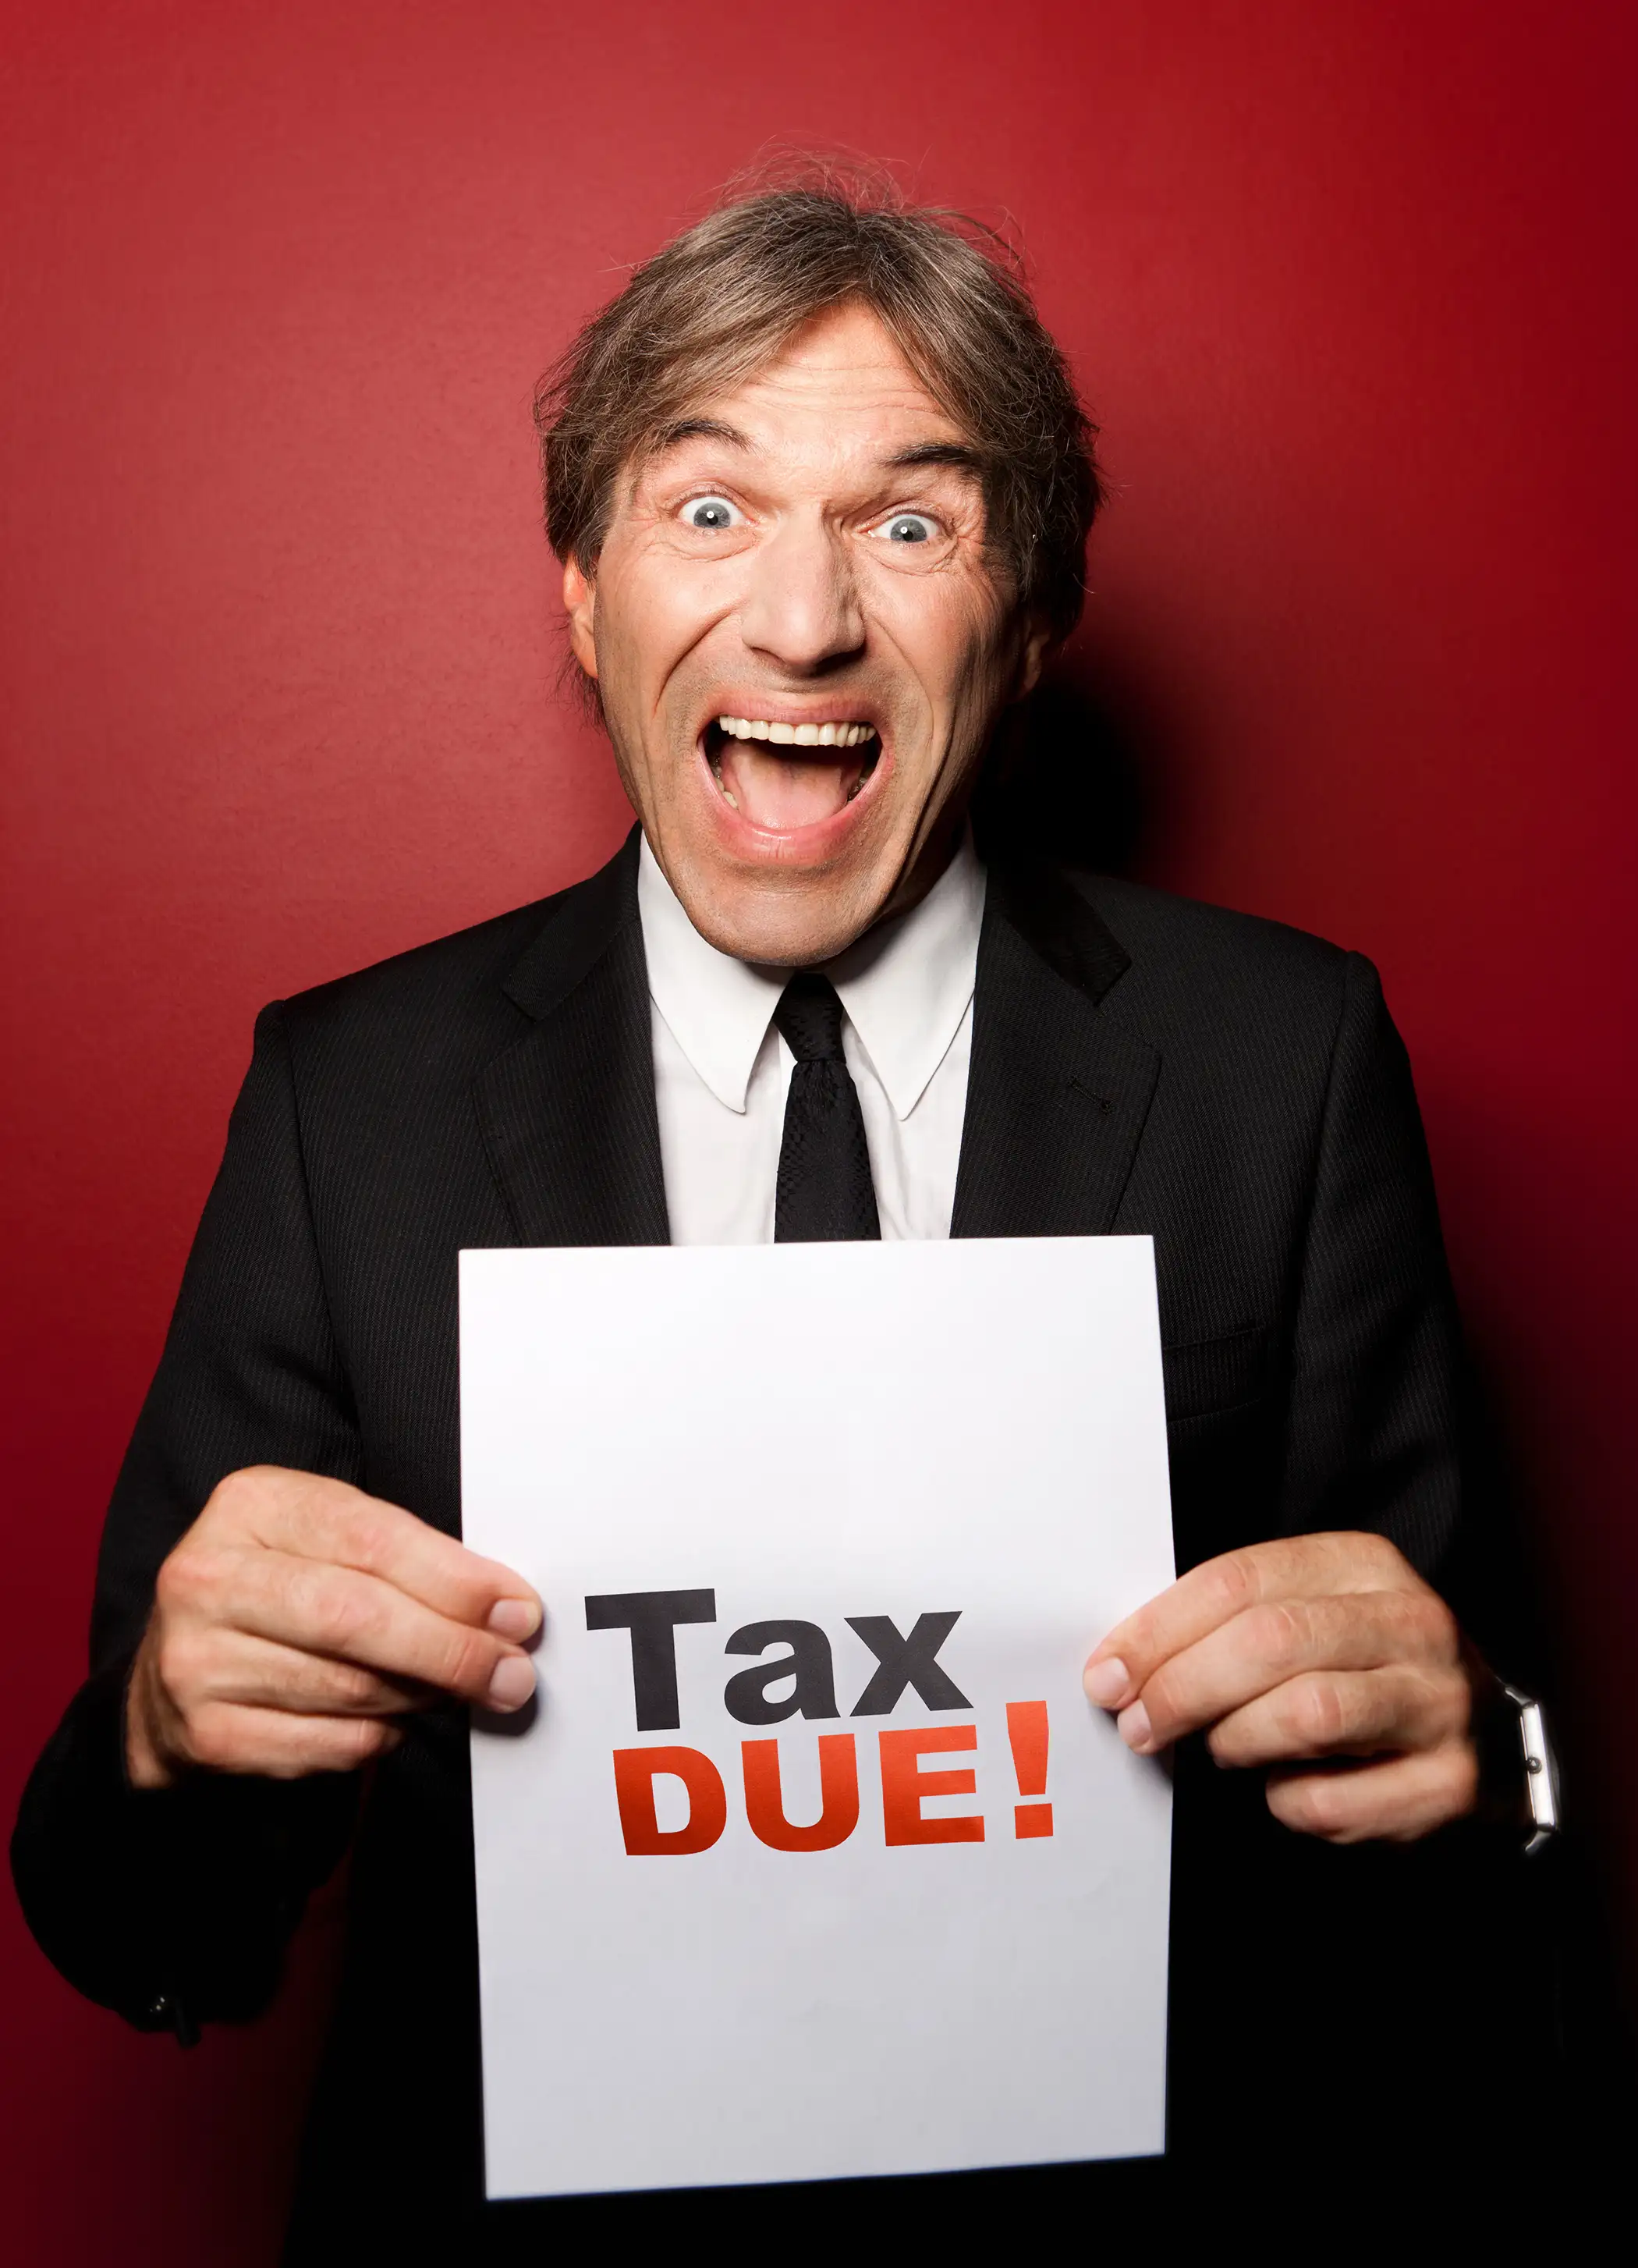 Tax Due!